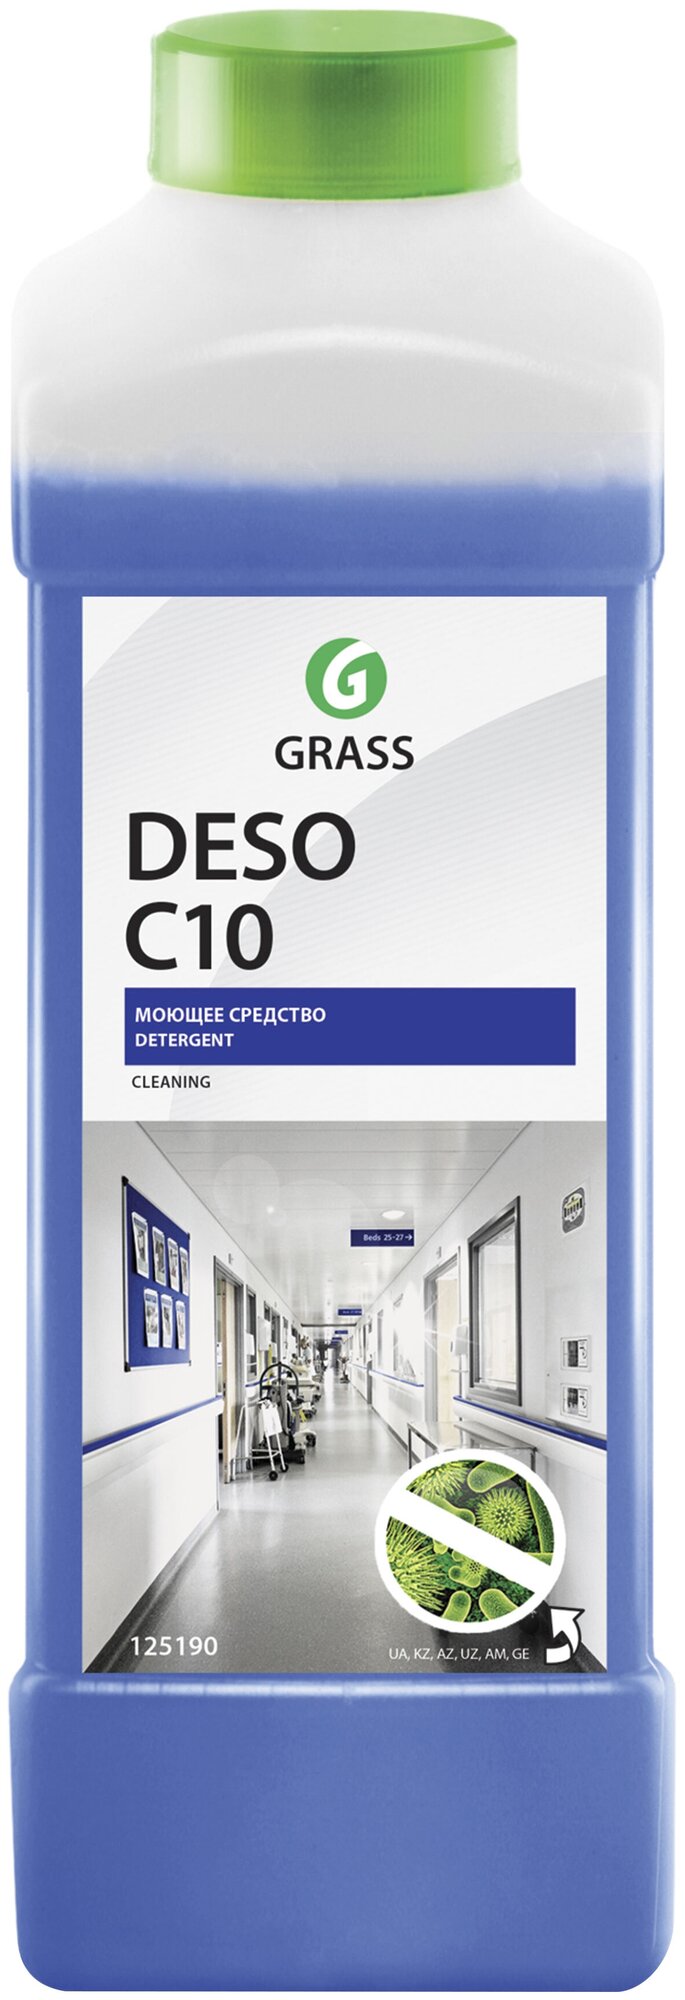 Grass Средство для чистки и дезинфекции DESO C10